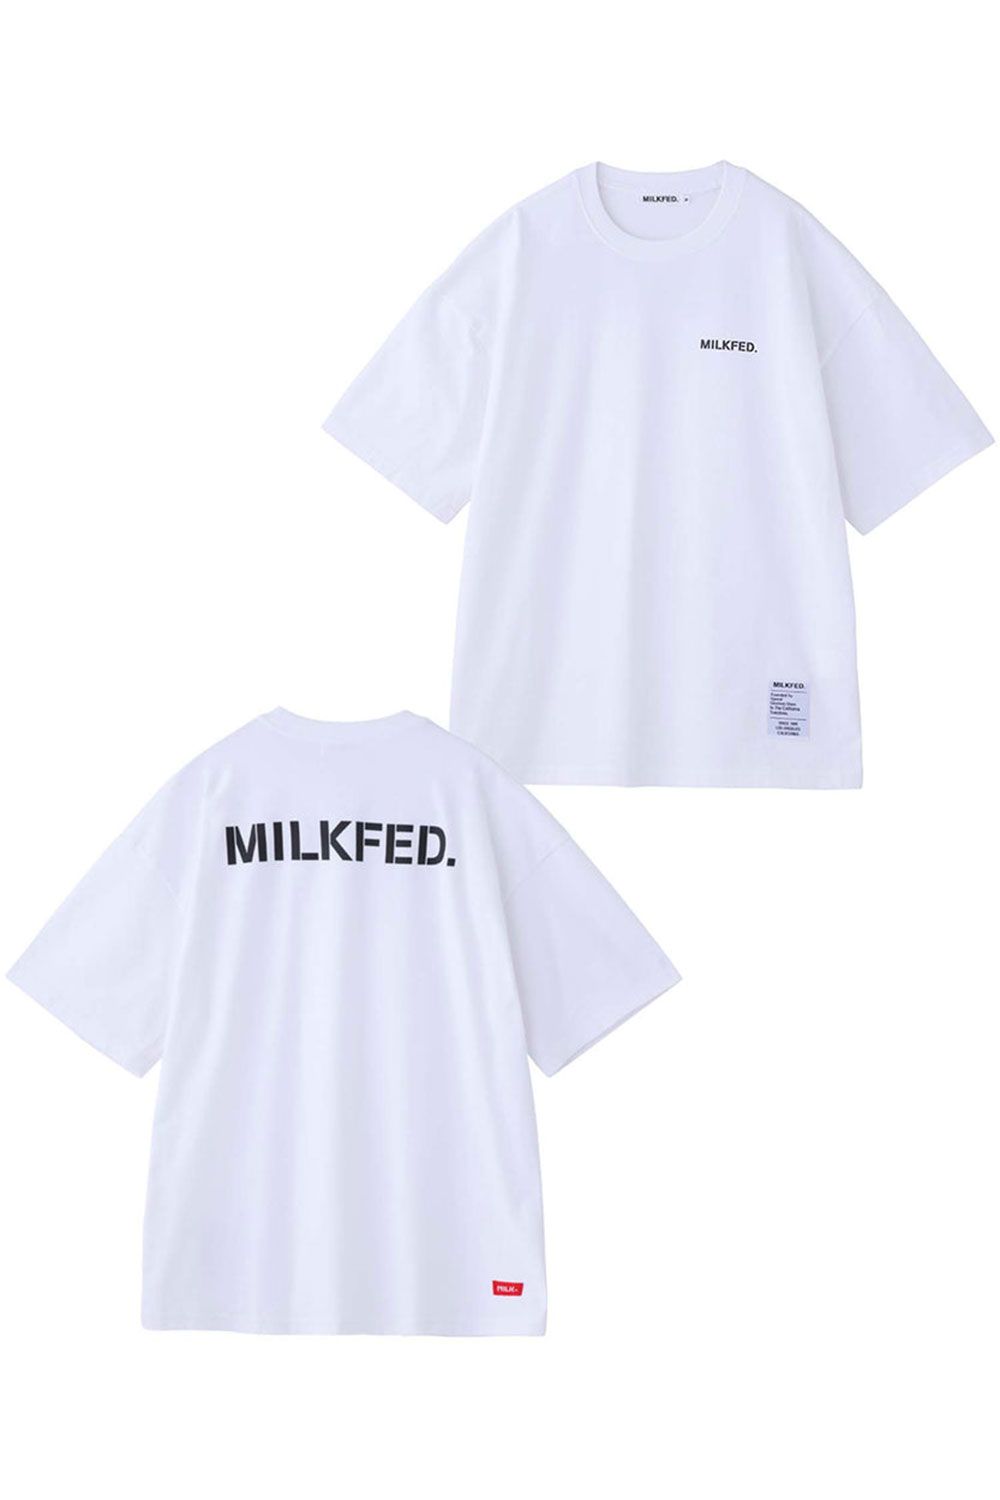 X-girl milkfed Tシャツ バッグ 10点